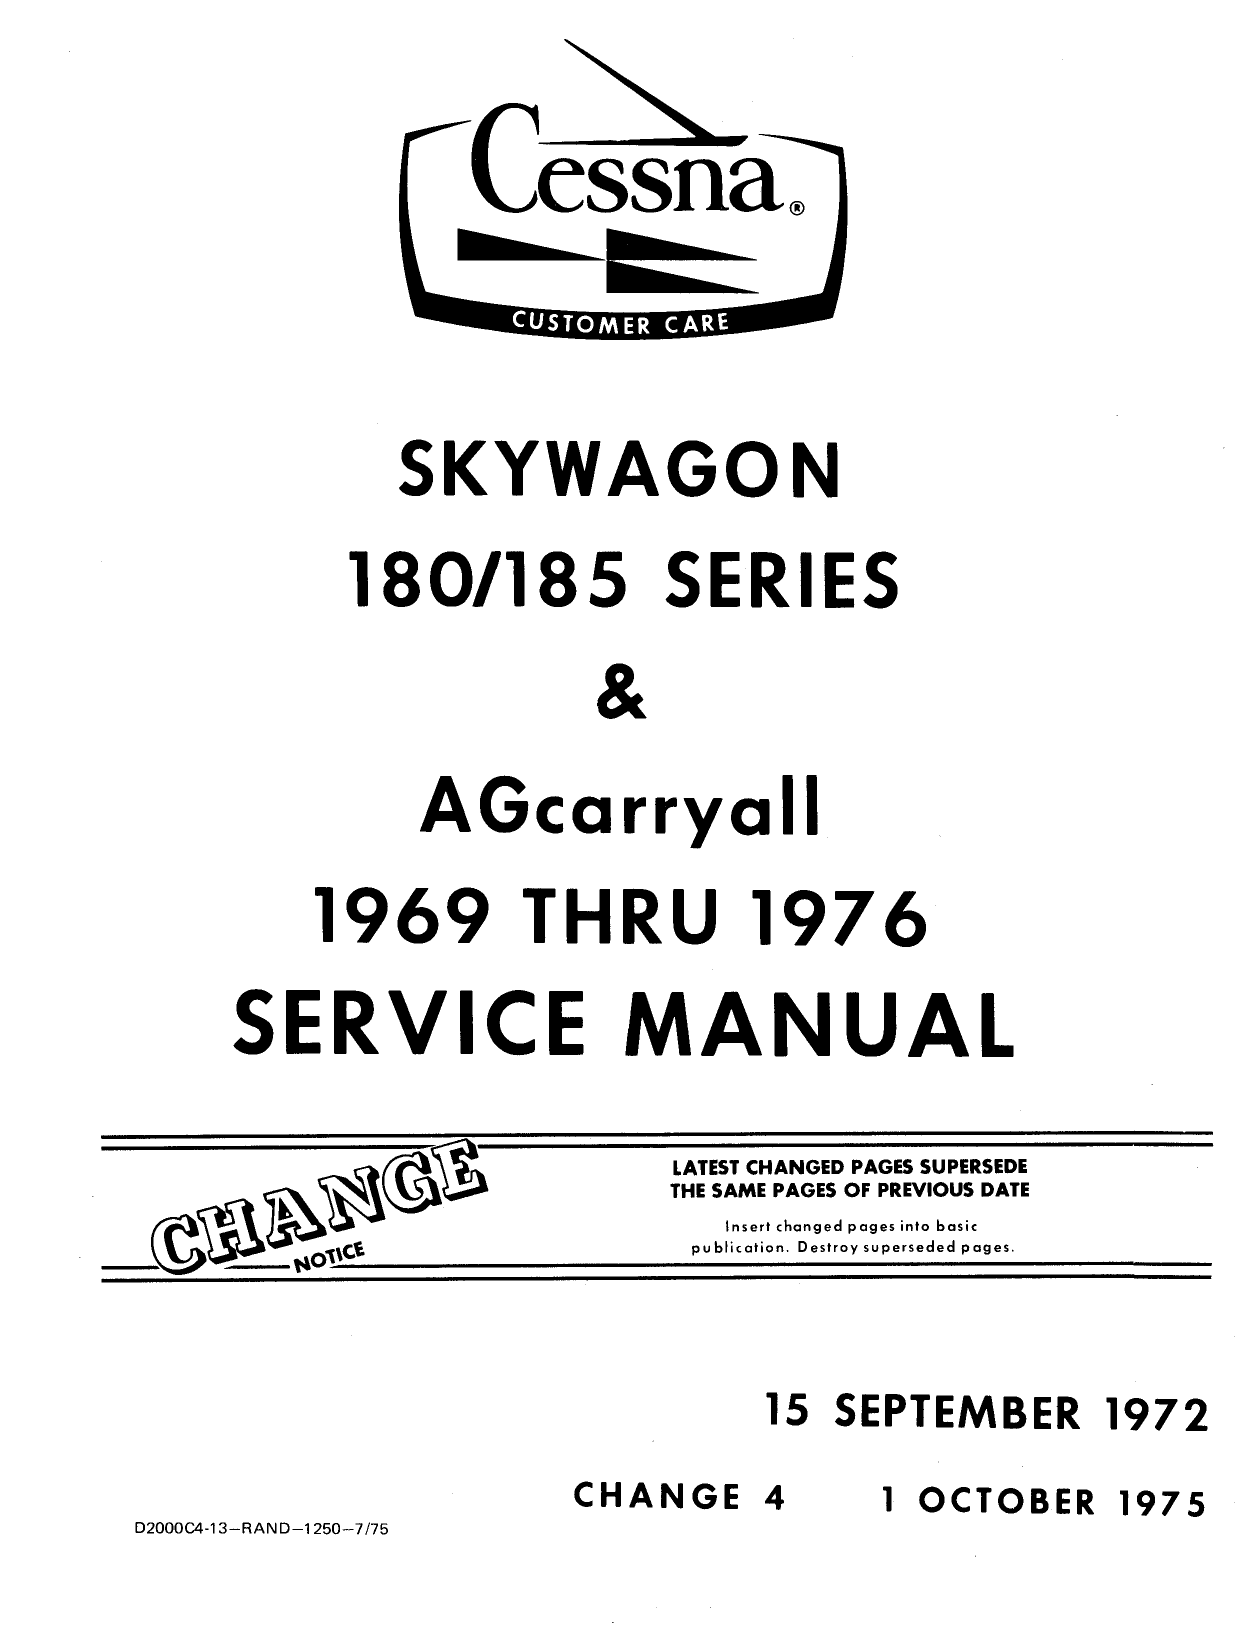 1969-1976 Cessna Skywagon180/185 series aircraft service manual Preview image 1